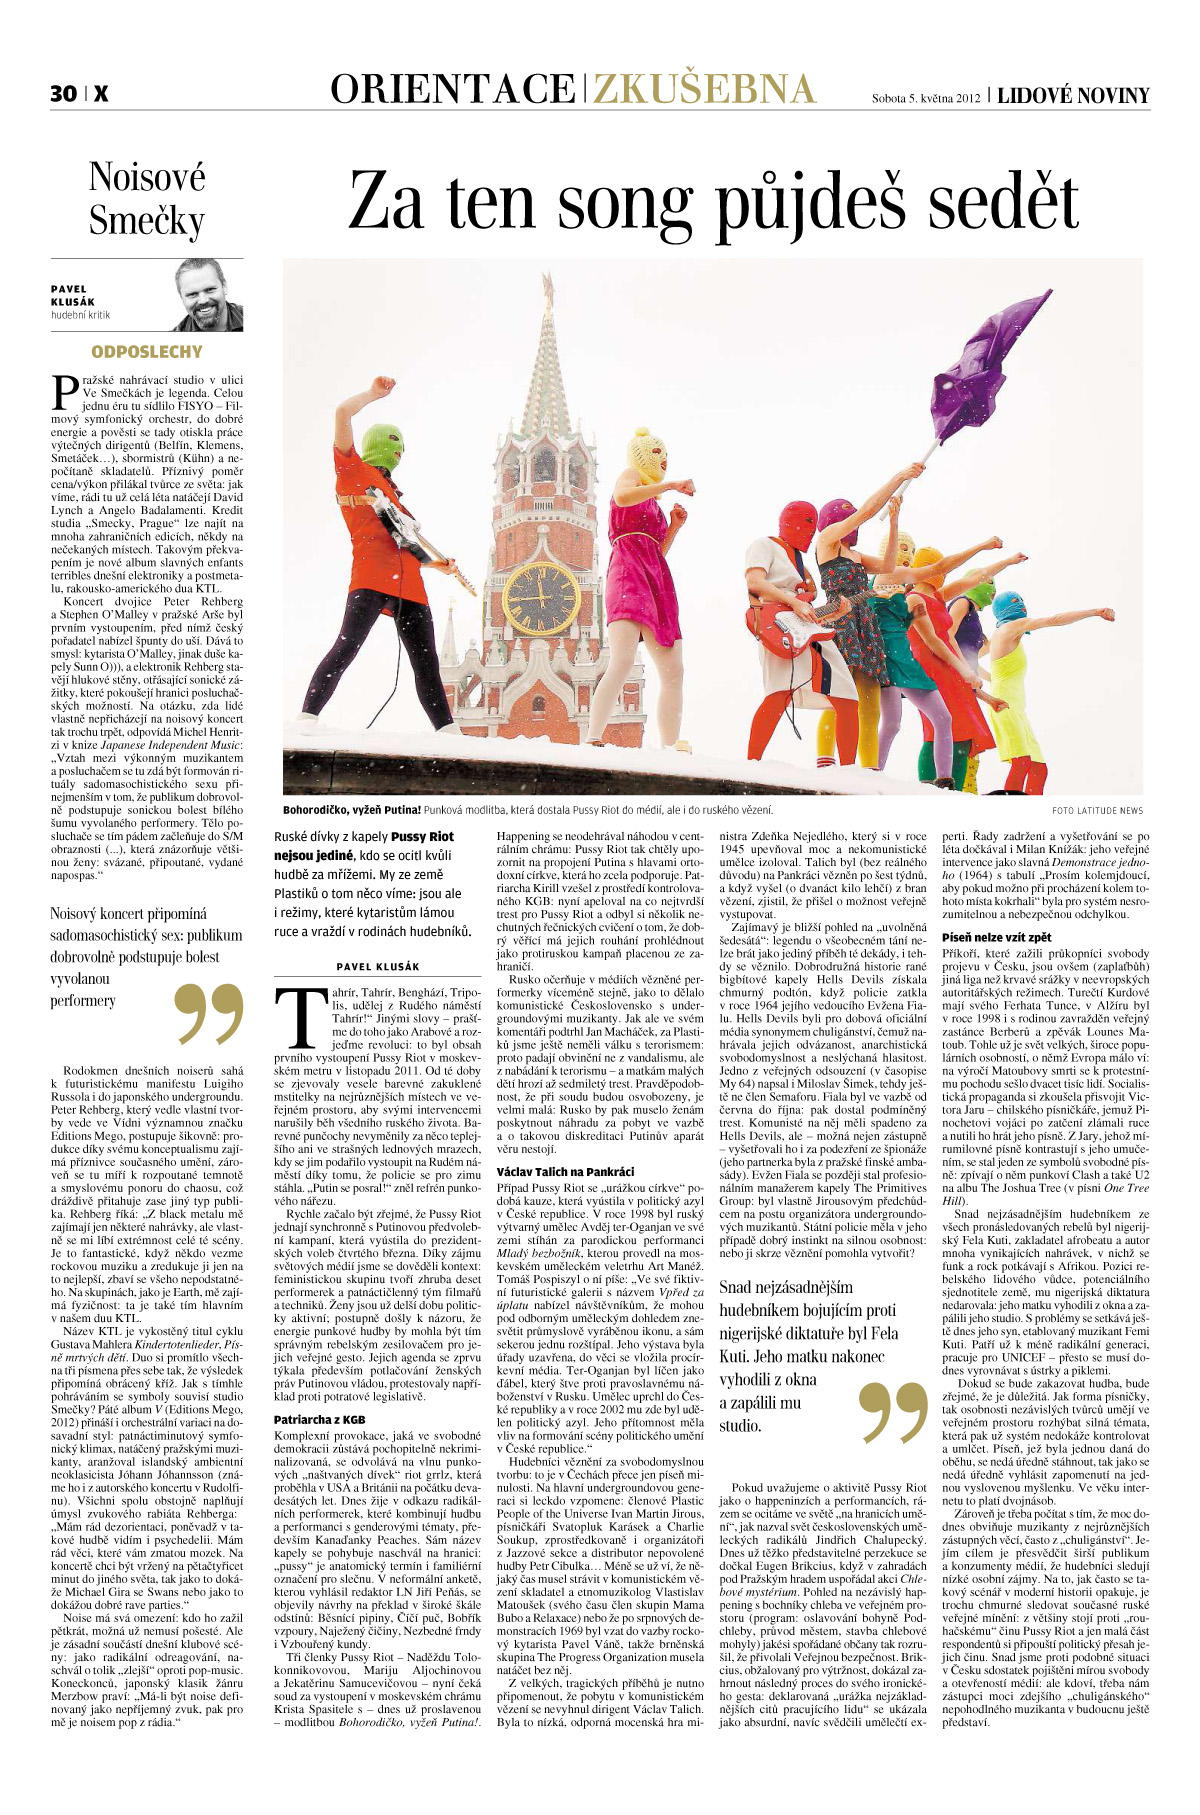 KTL & Pussy Riot in Czech newspaper